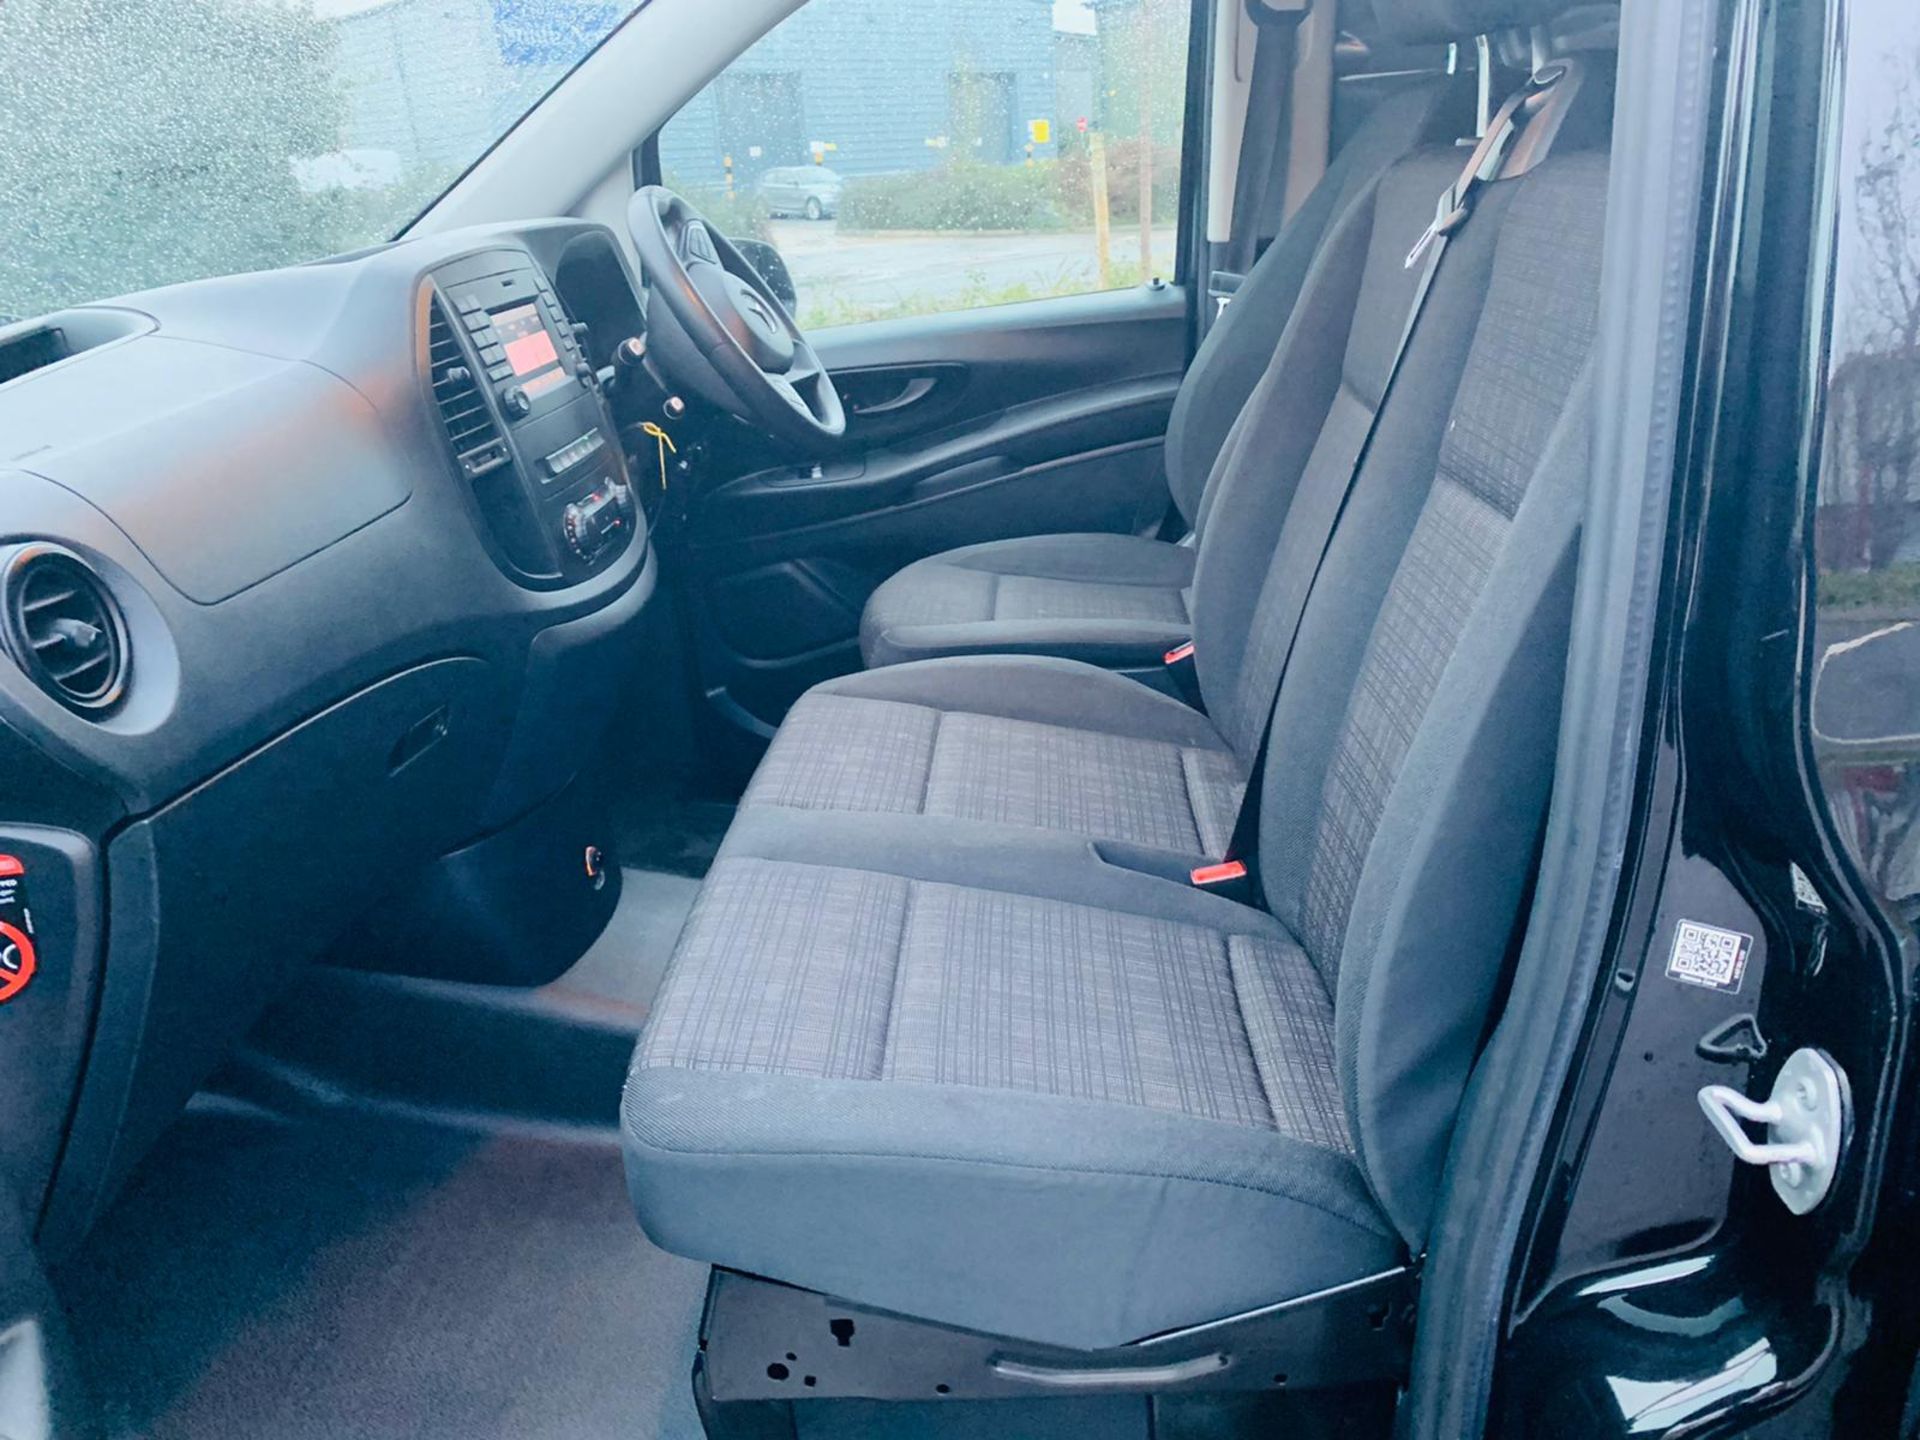 (RESERVE MET) Mercedes Vito 114 Bluetec Panel Van - 7G Auto - 2018 18 Reg - LWB - Sat Nav -35k - AC - Image 14 of 26